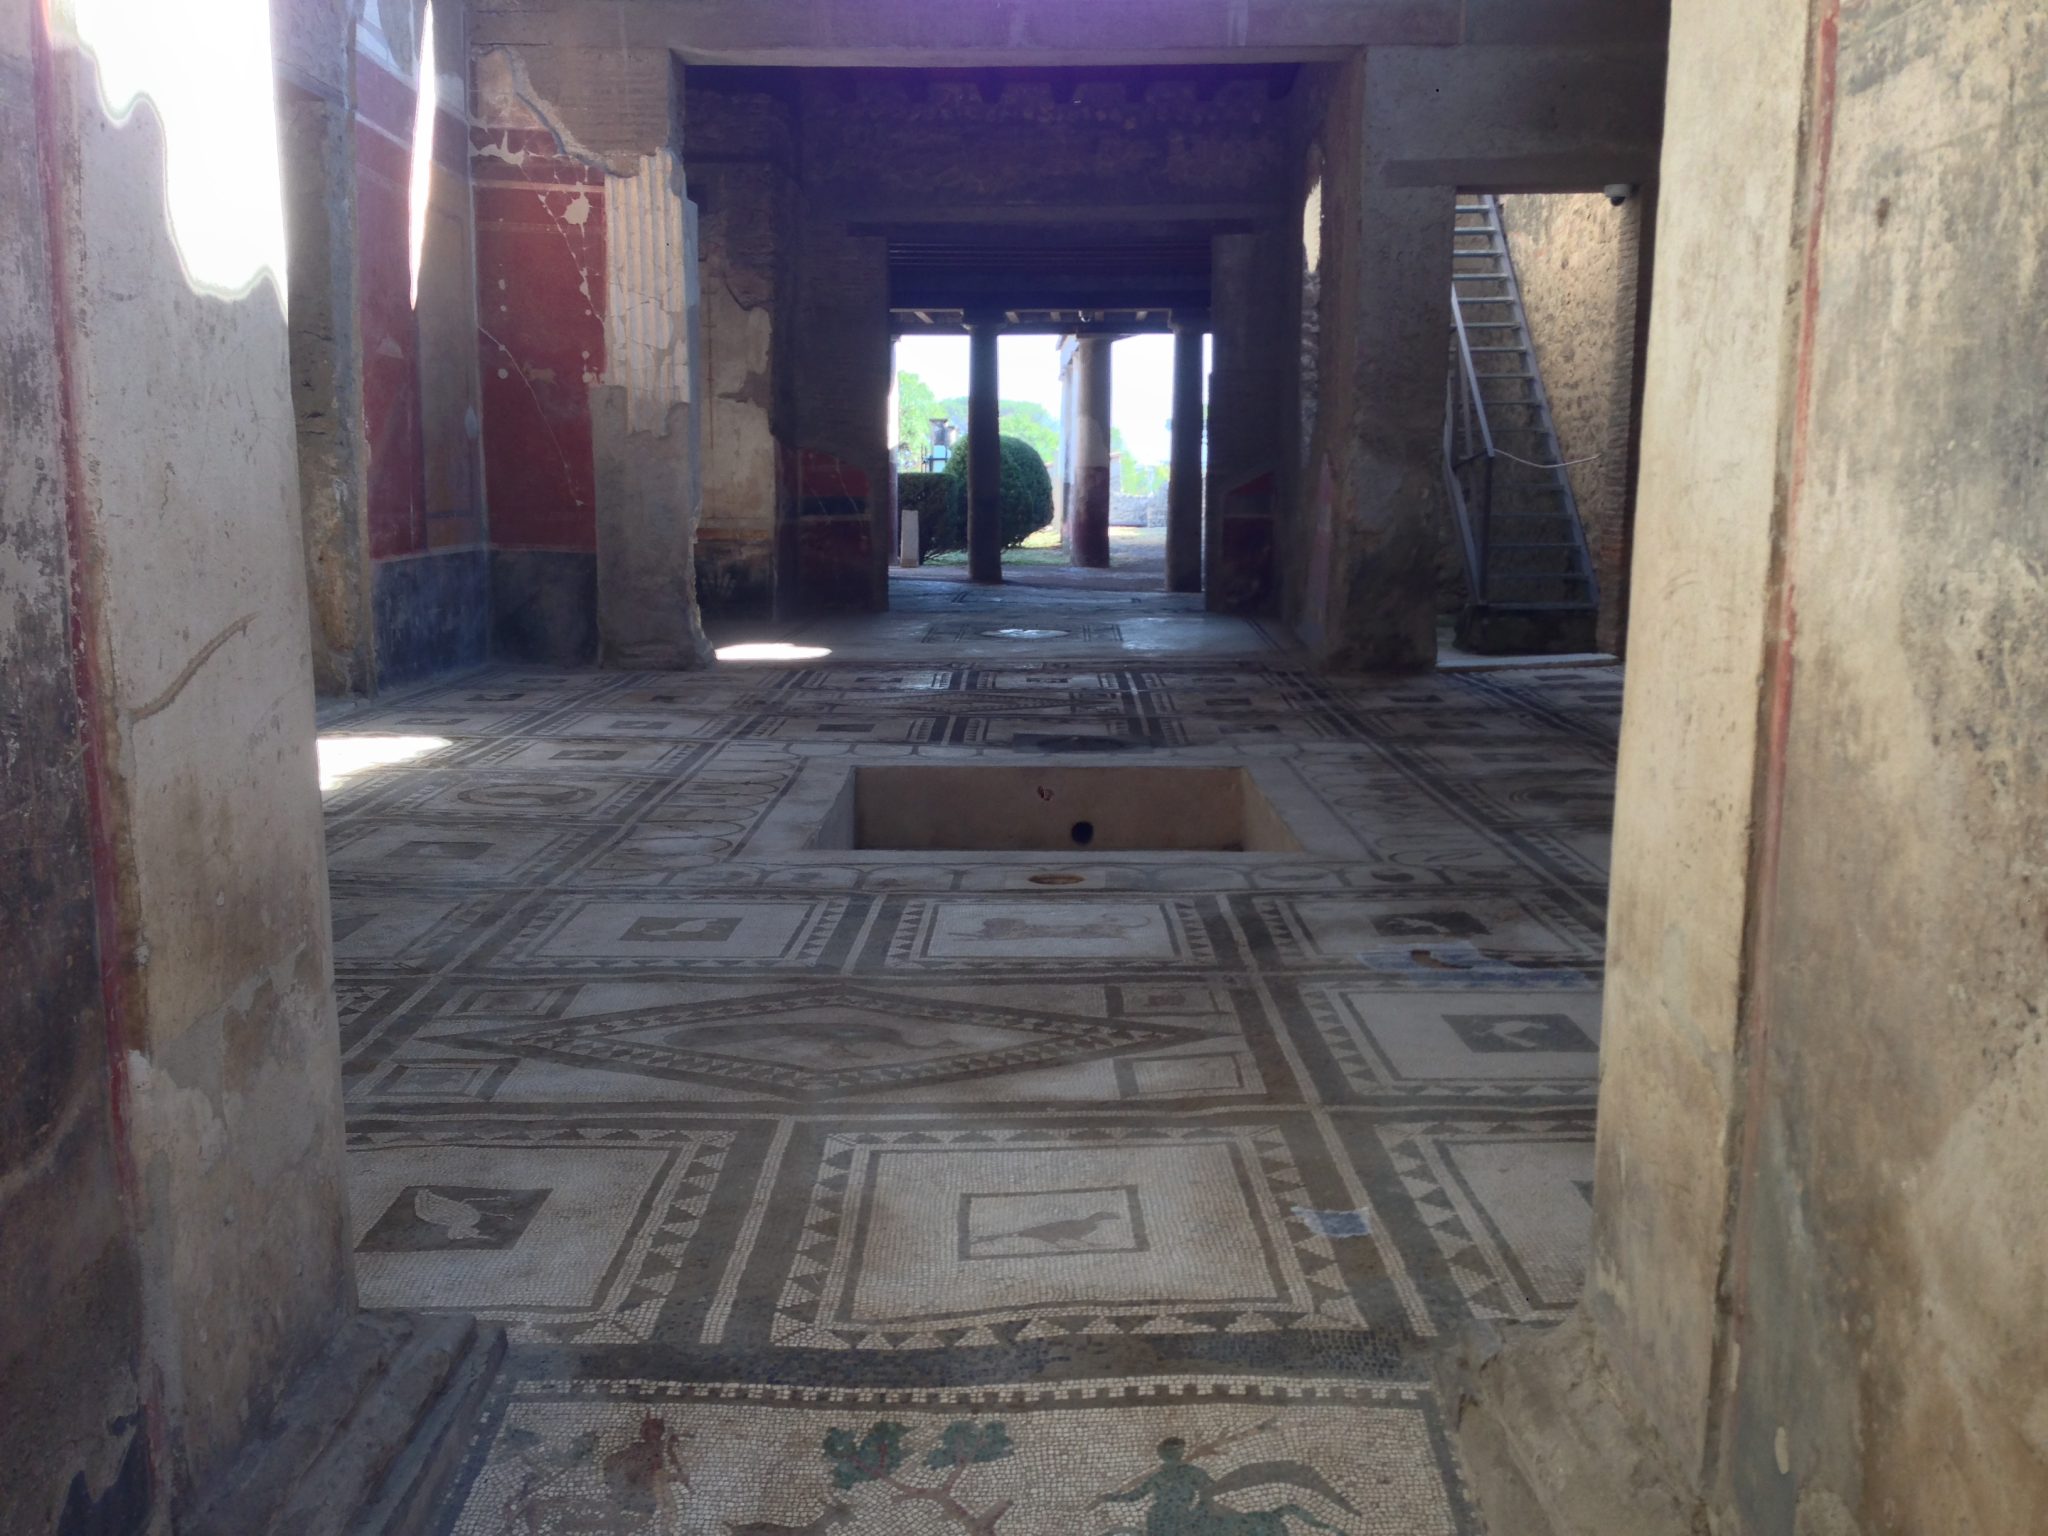 Interior of Roman villa, with mosaic tile floor - Pompeii - Italy